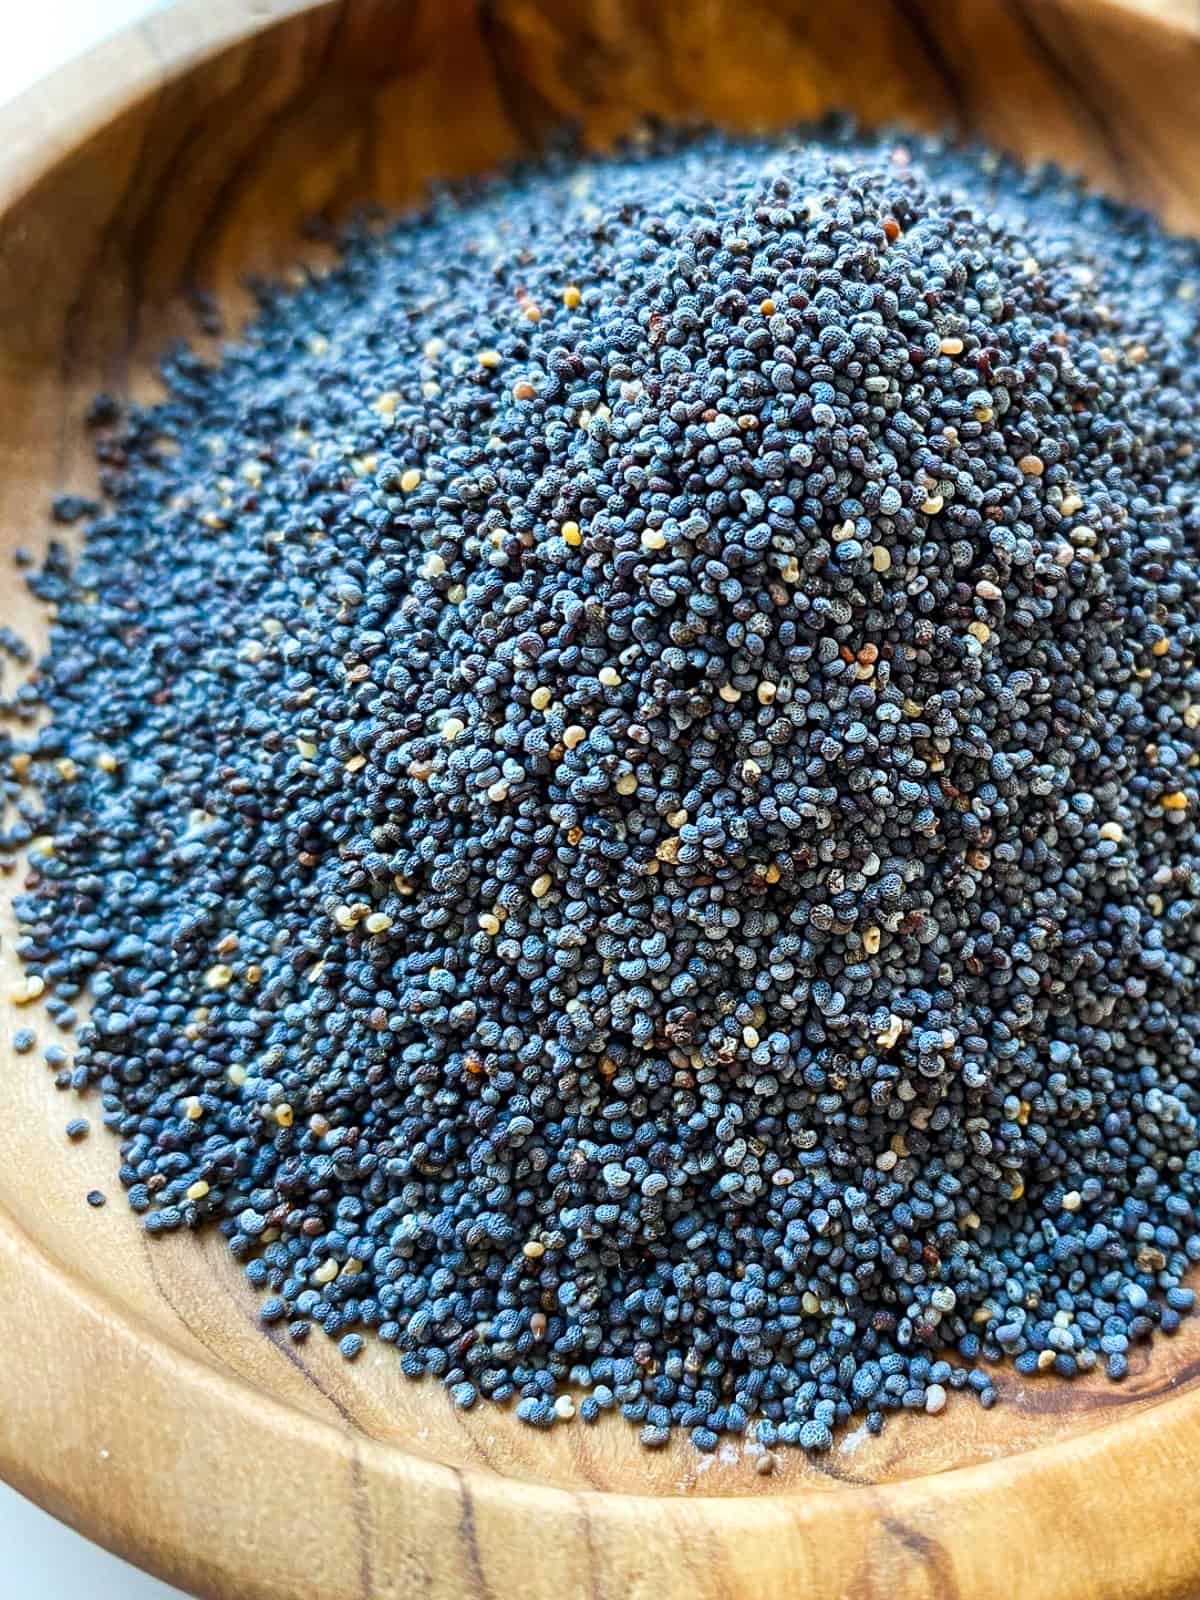 A close up image of blue poppy seeds.